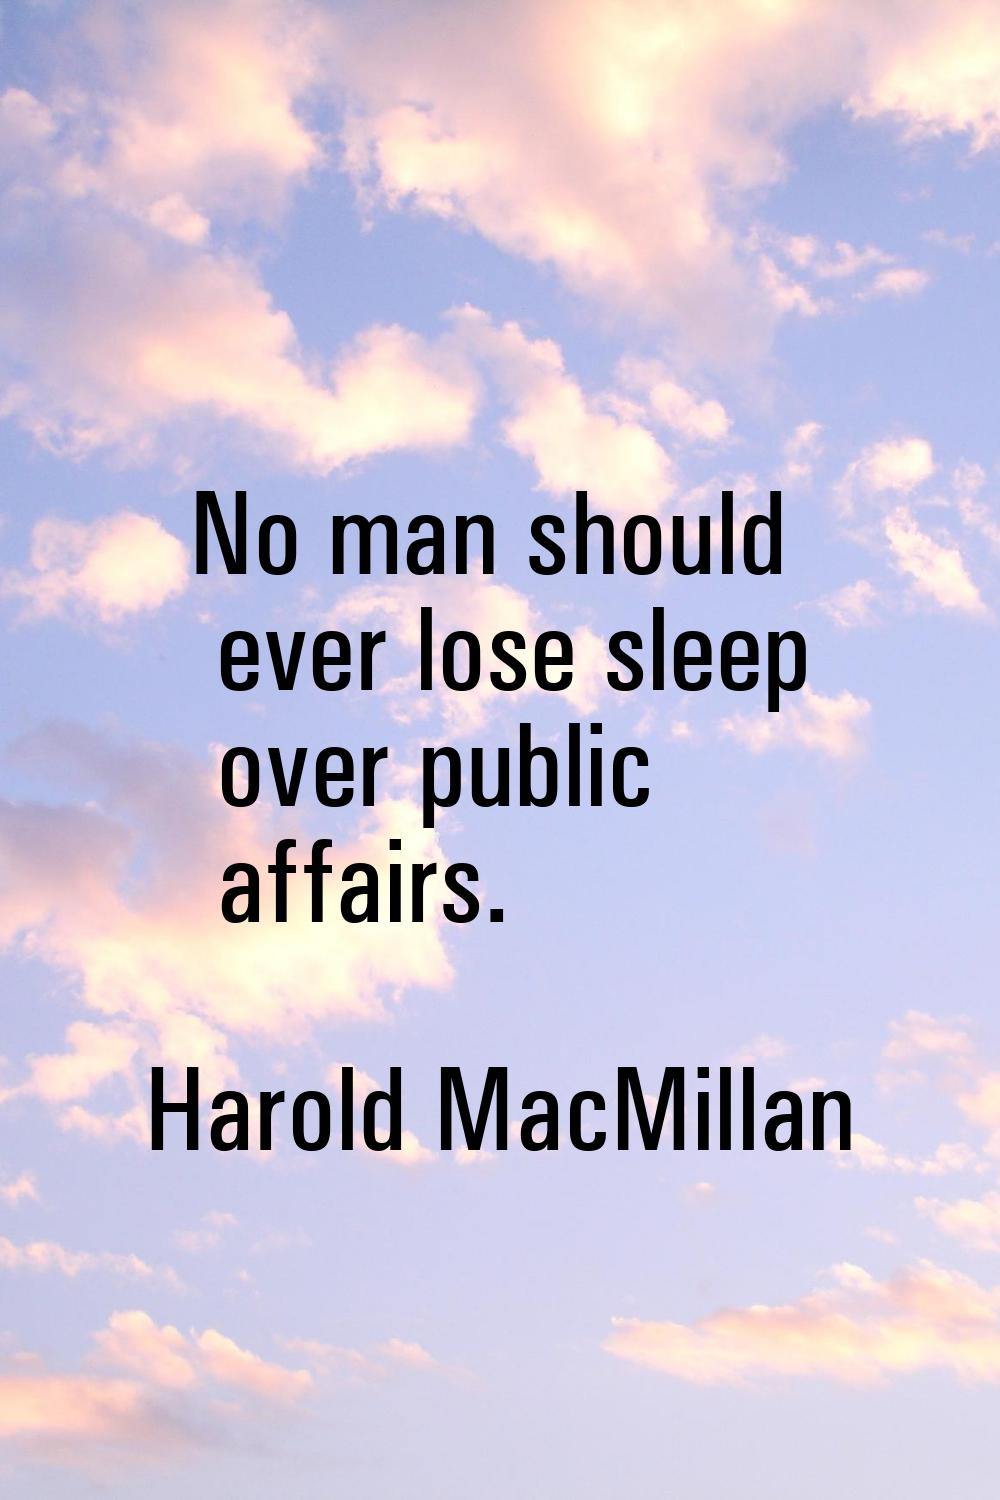 No man should ever lose sleep over public affairs.